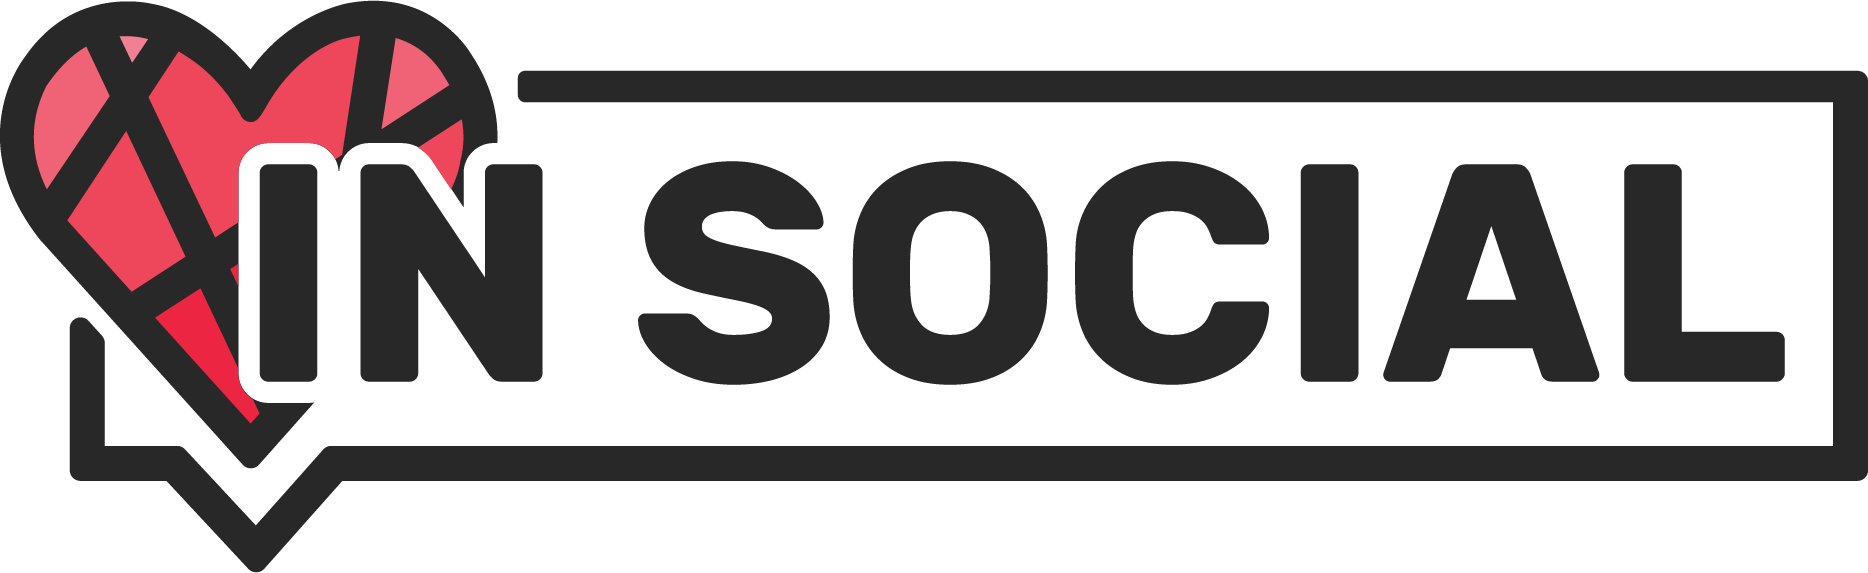 Insocial logo 1